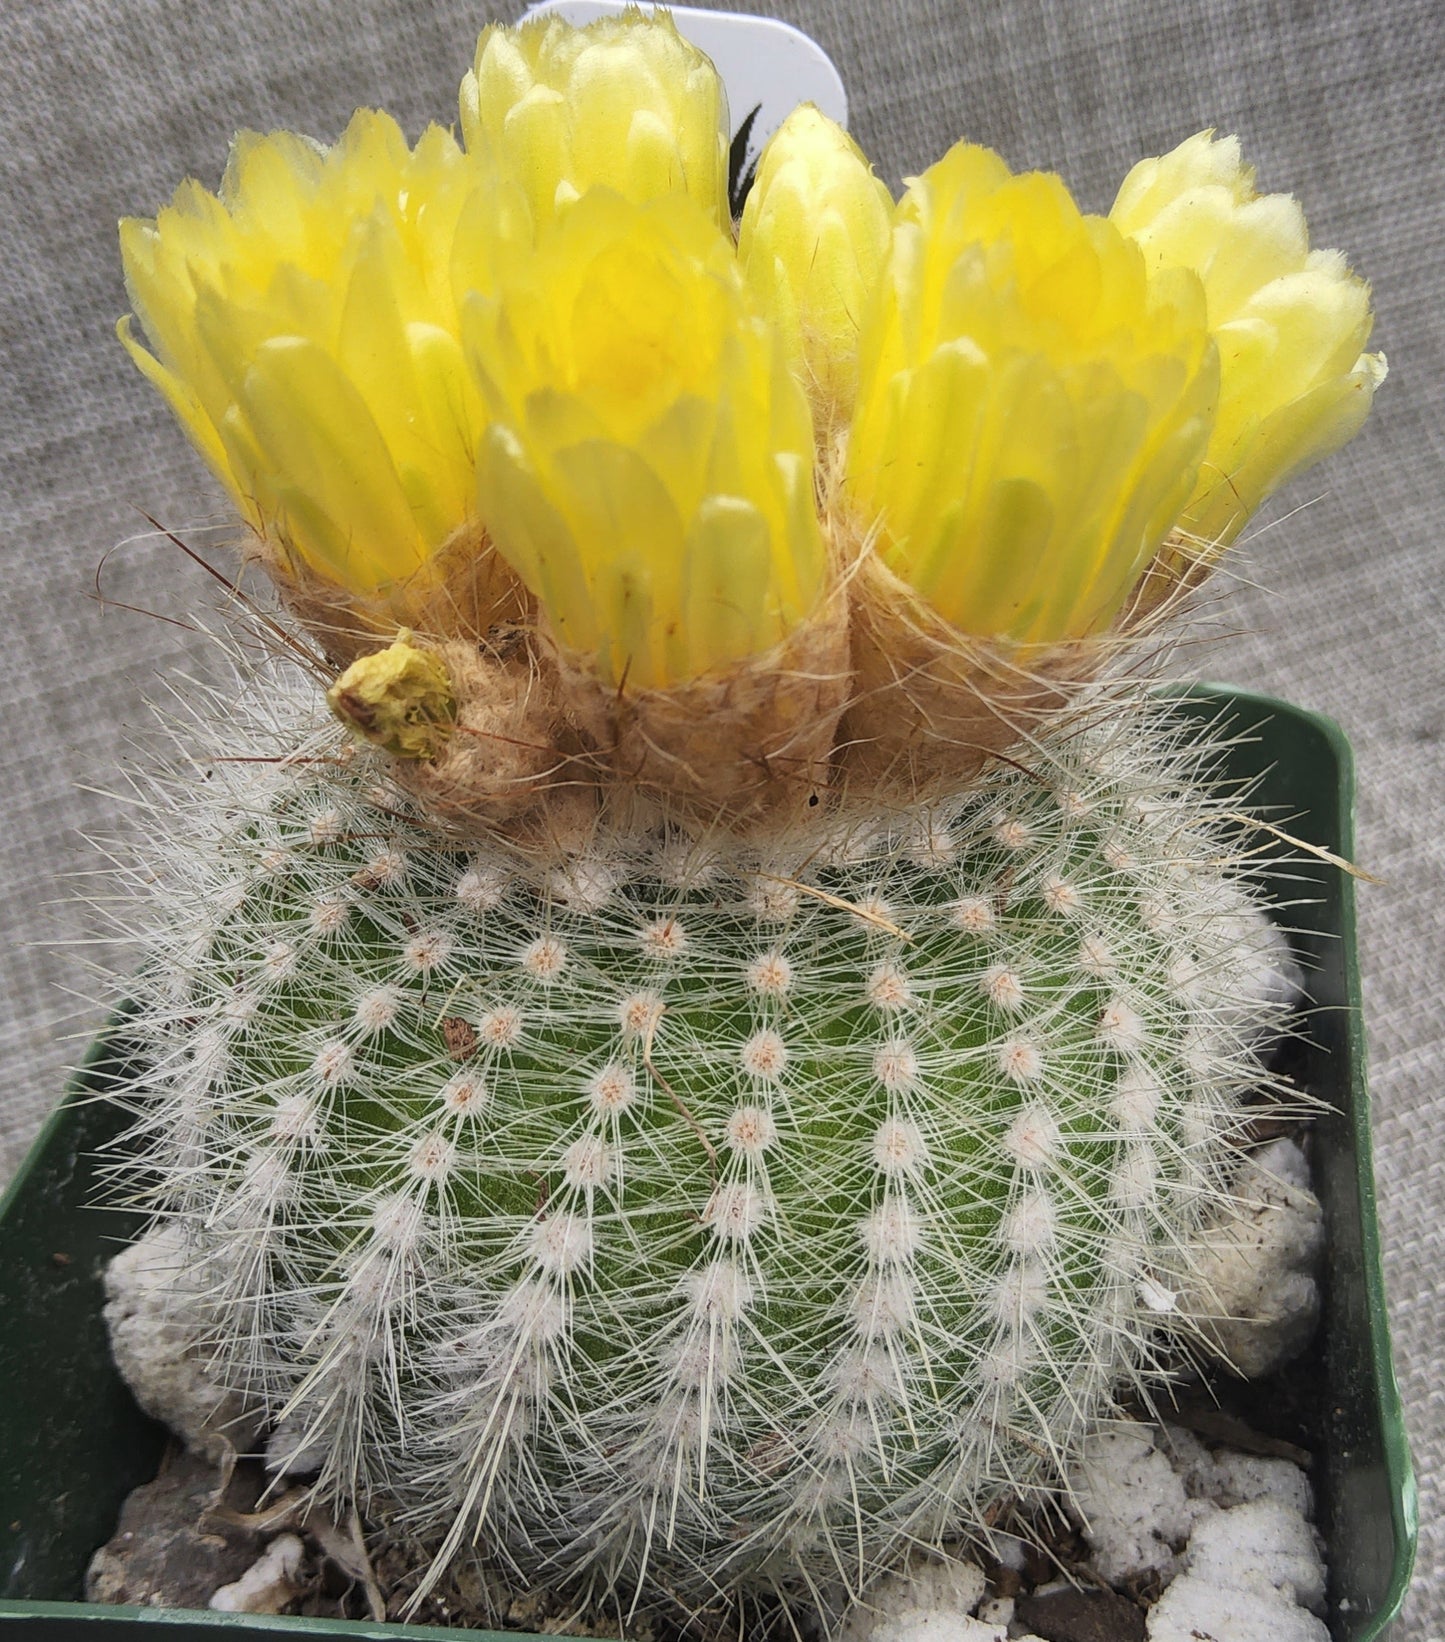 Notocactus scopa Live Cactus Growing in 4 Inch